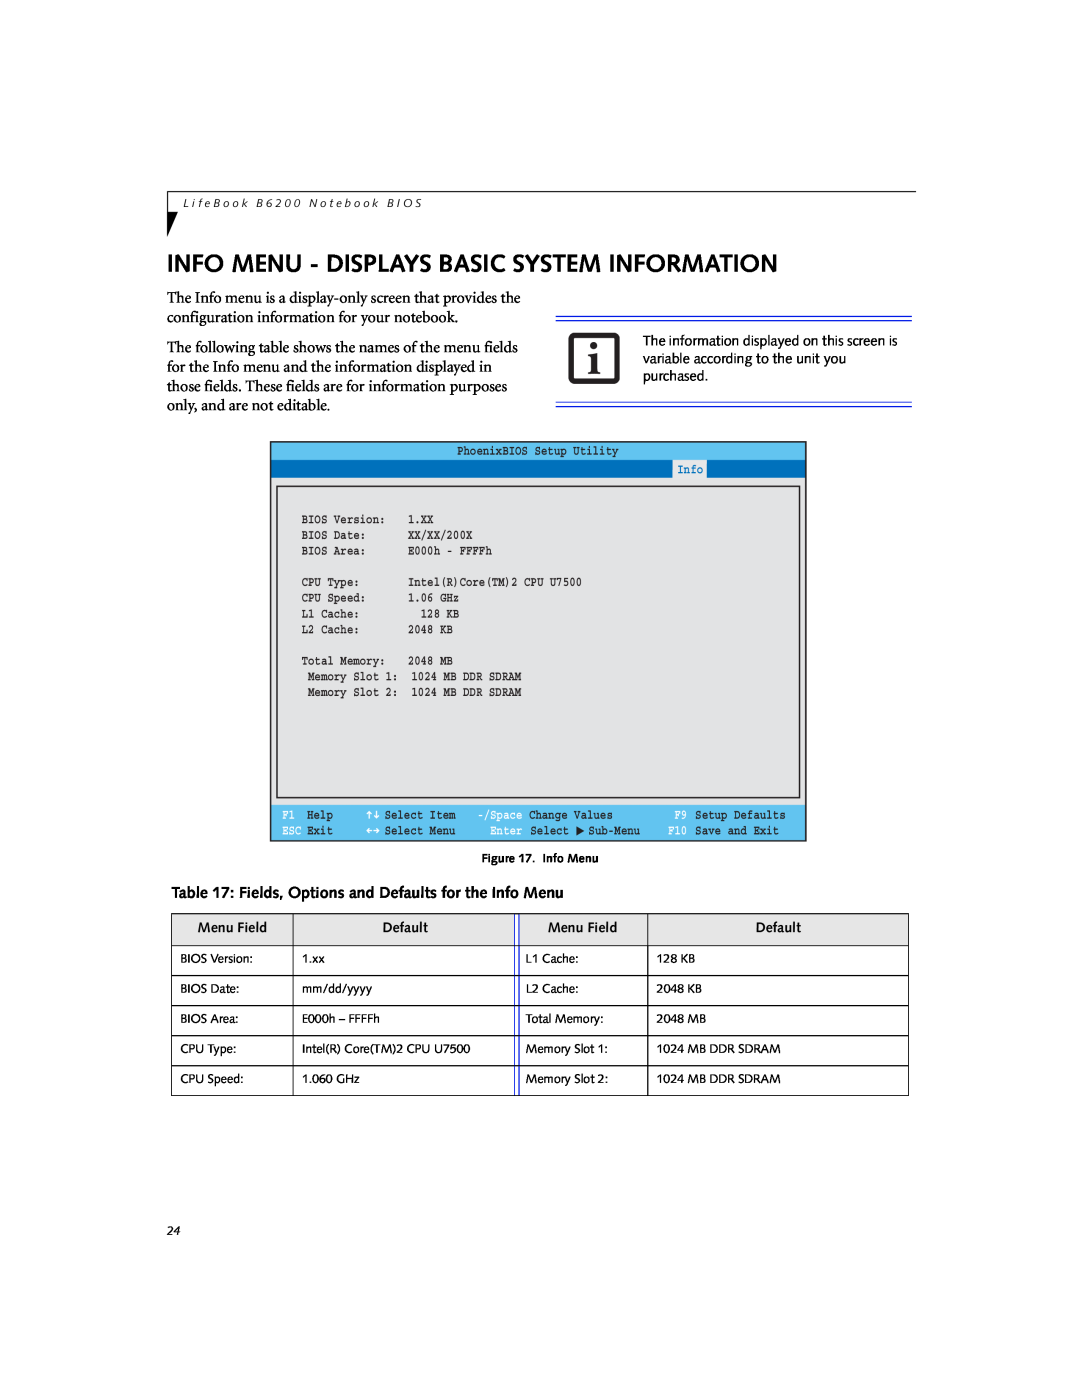 Fujitsu Siemens Computers B6230 manual Info Menu - Displays Basic System Information 